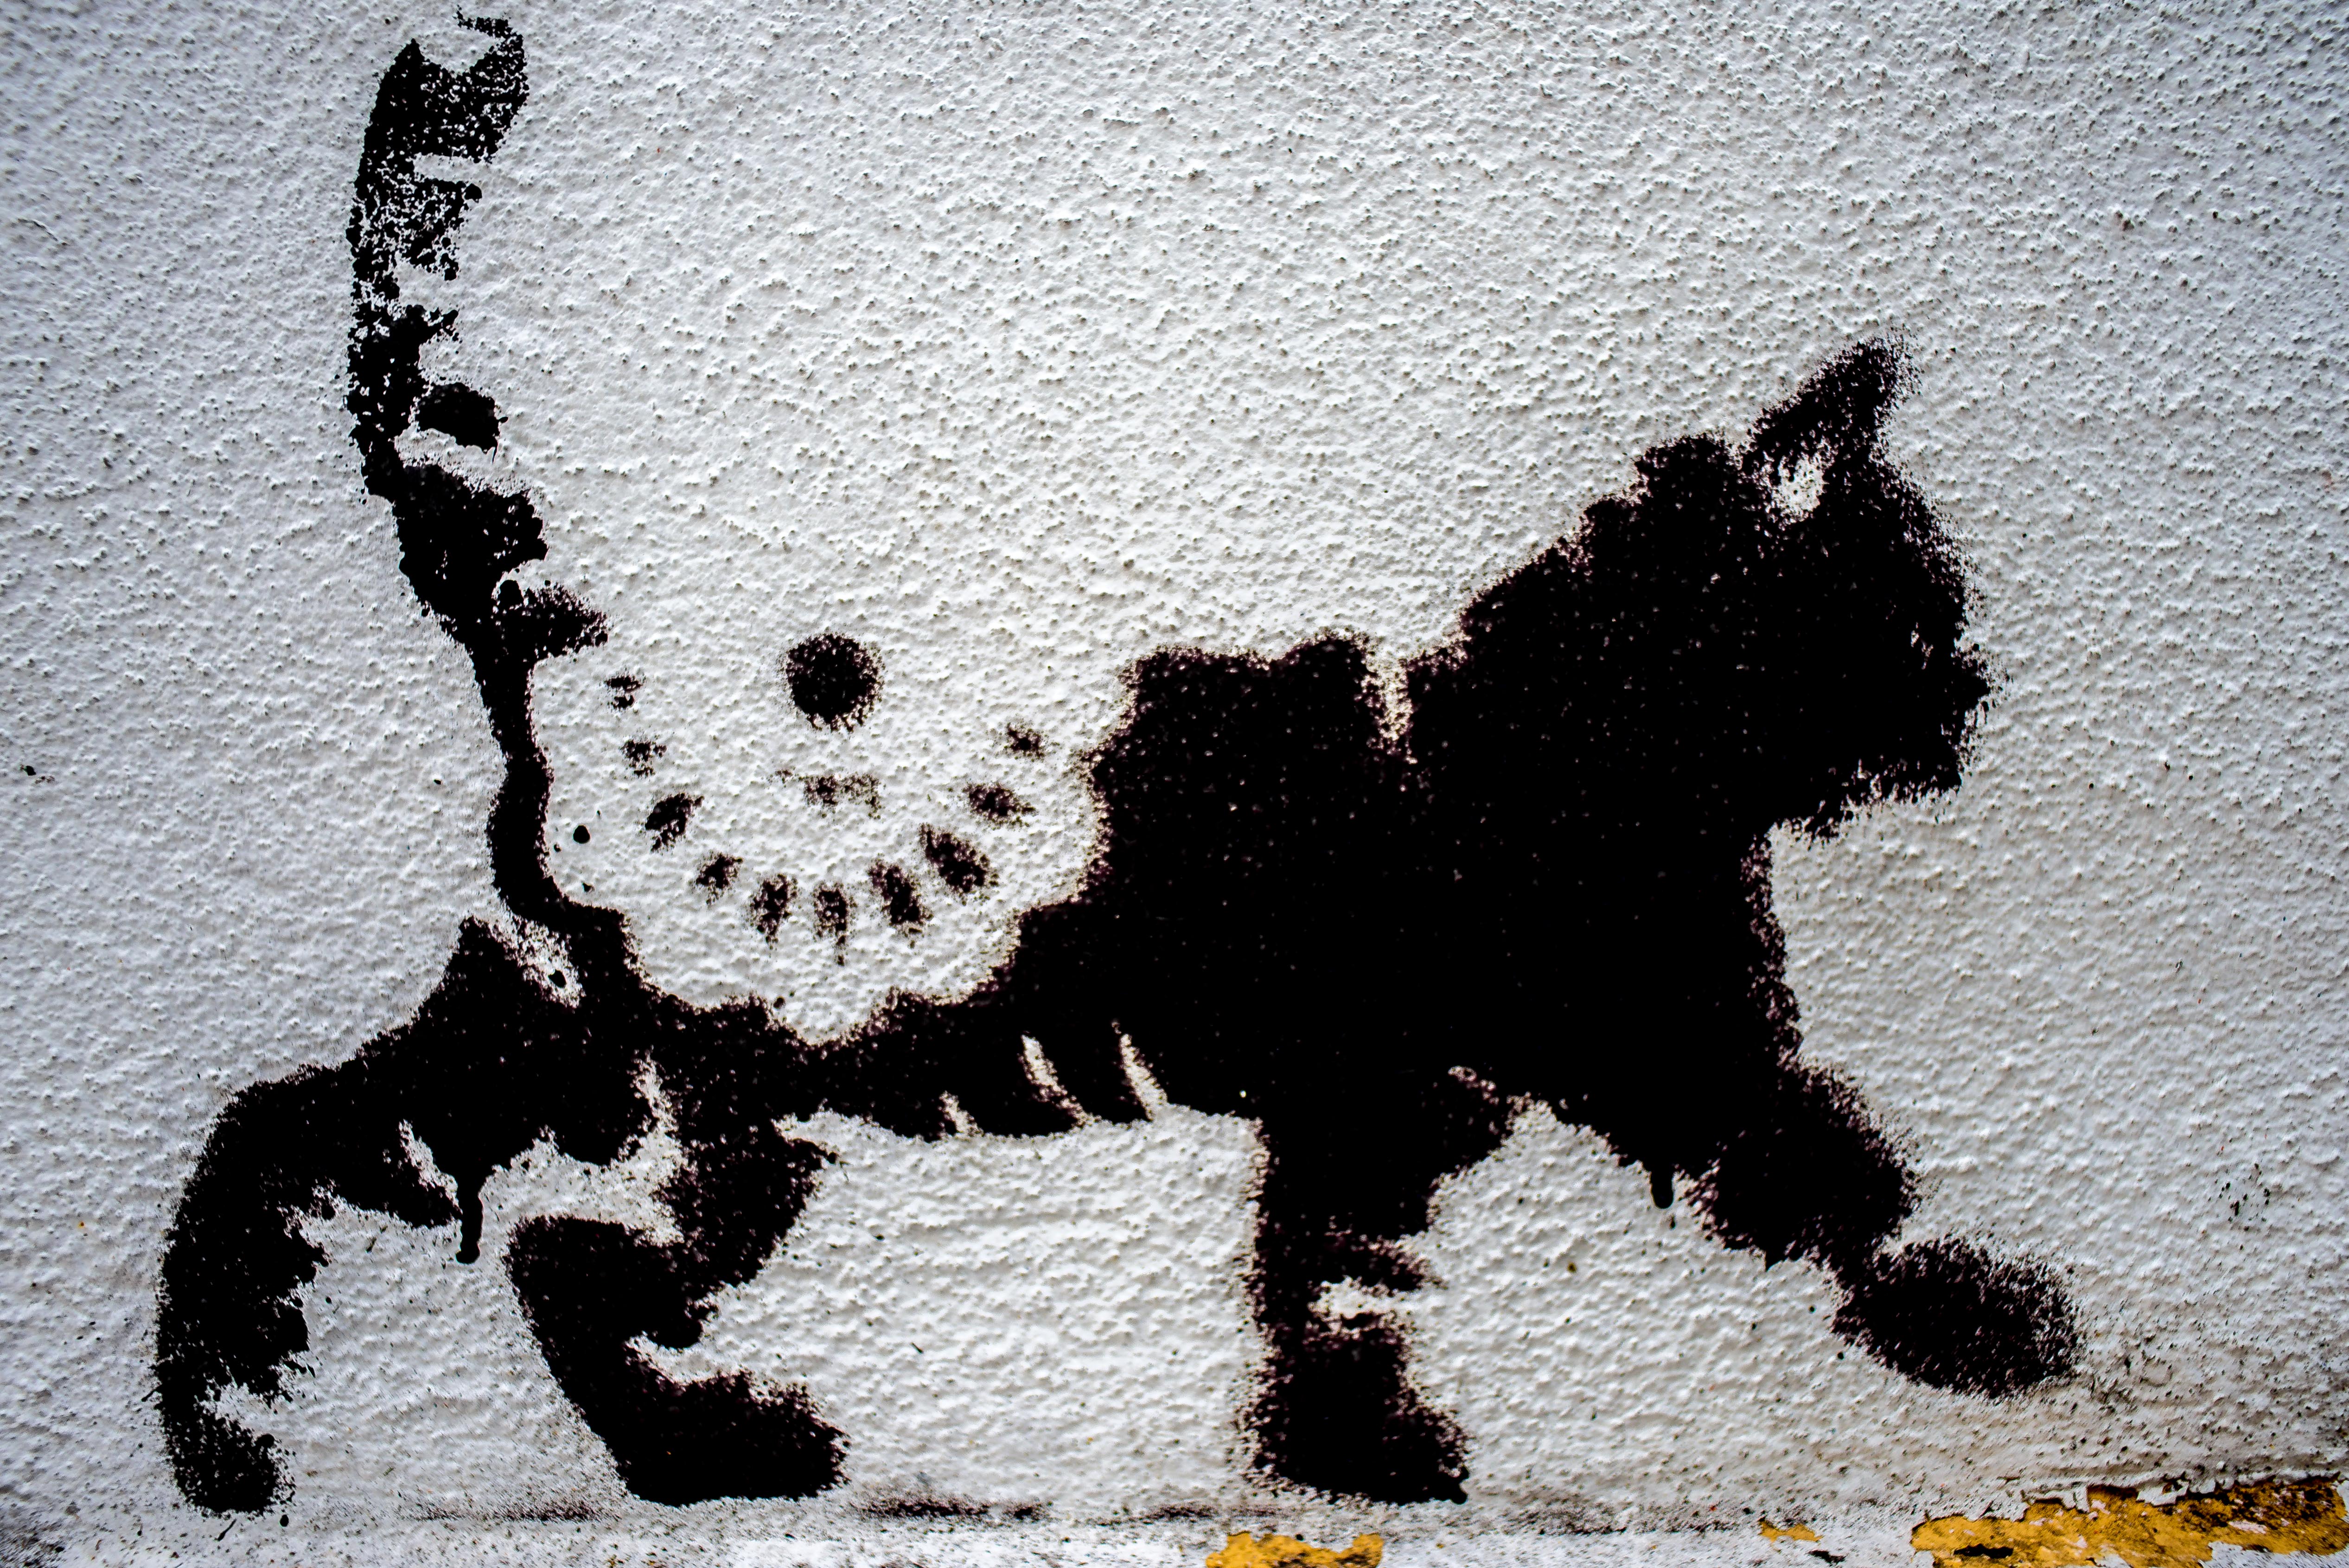 Street art à Georgetown Penang Malaisie Asie blogvoyage Icietlabas 101 Lost Kittens - Les 101 Chatons Perdus